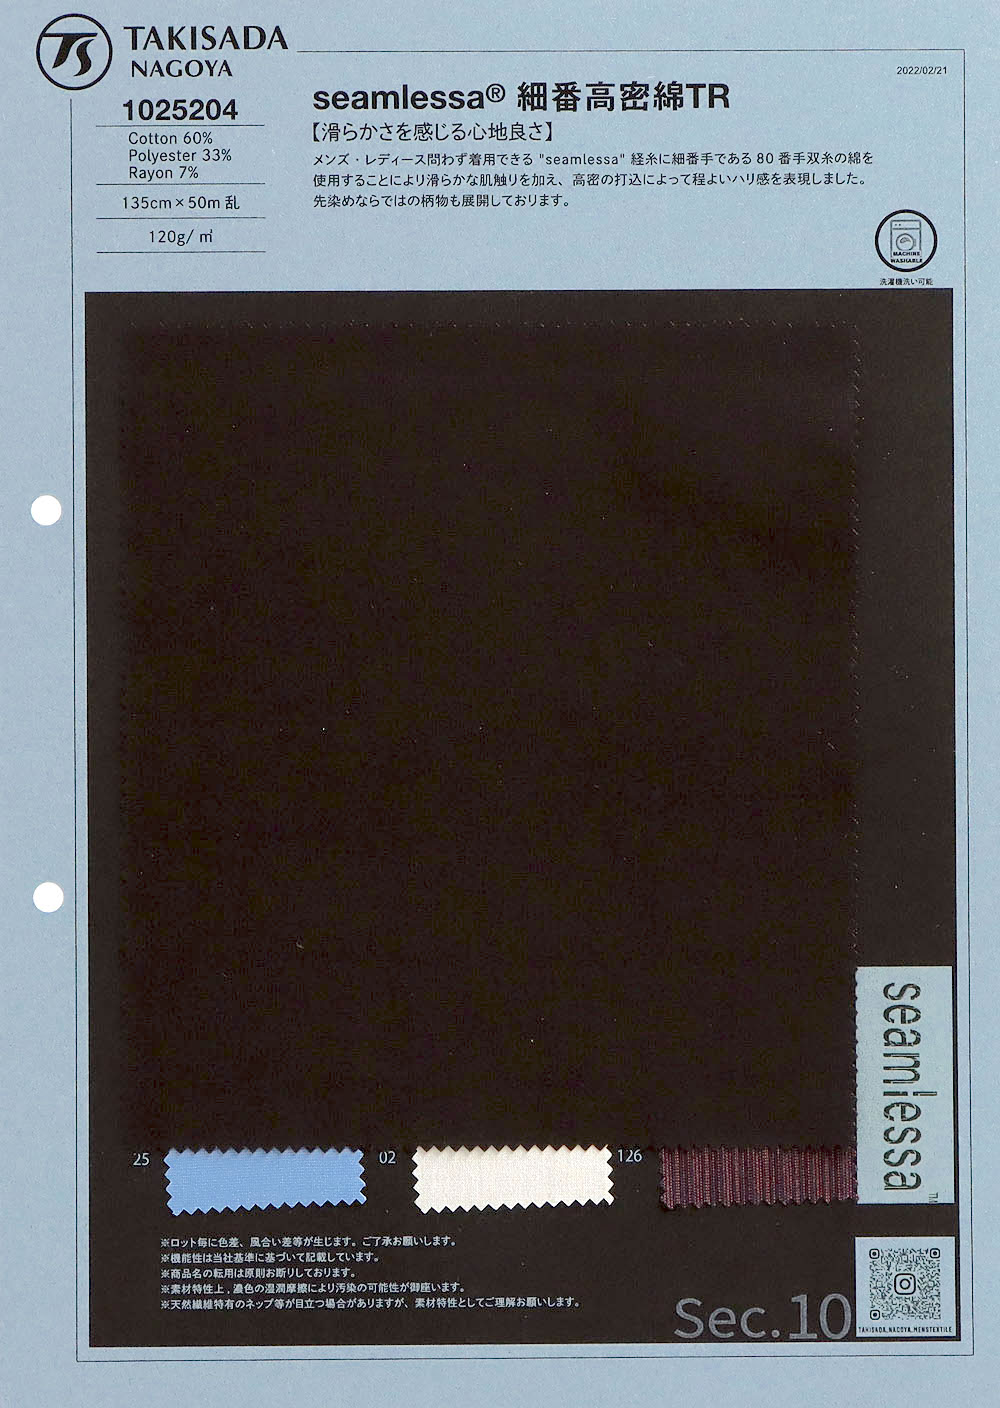 1025204 Seamlessa (R) Fine Number High Density Cotton TR[Textile / Fabric] Takisada Nagoya